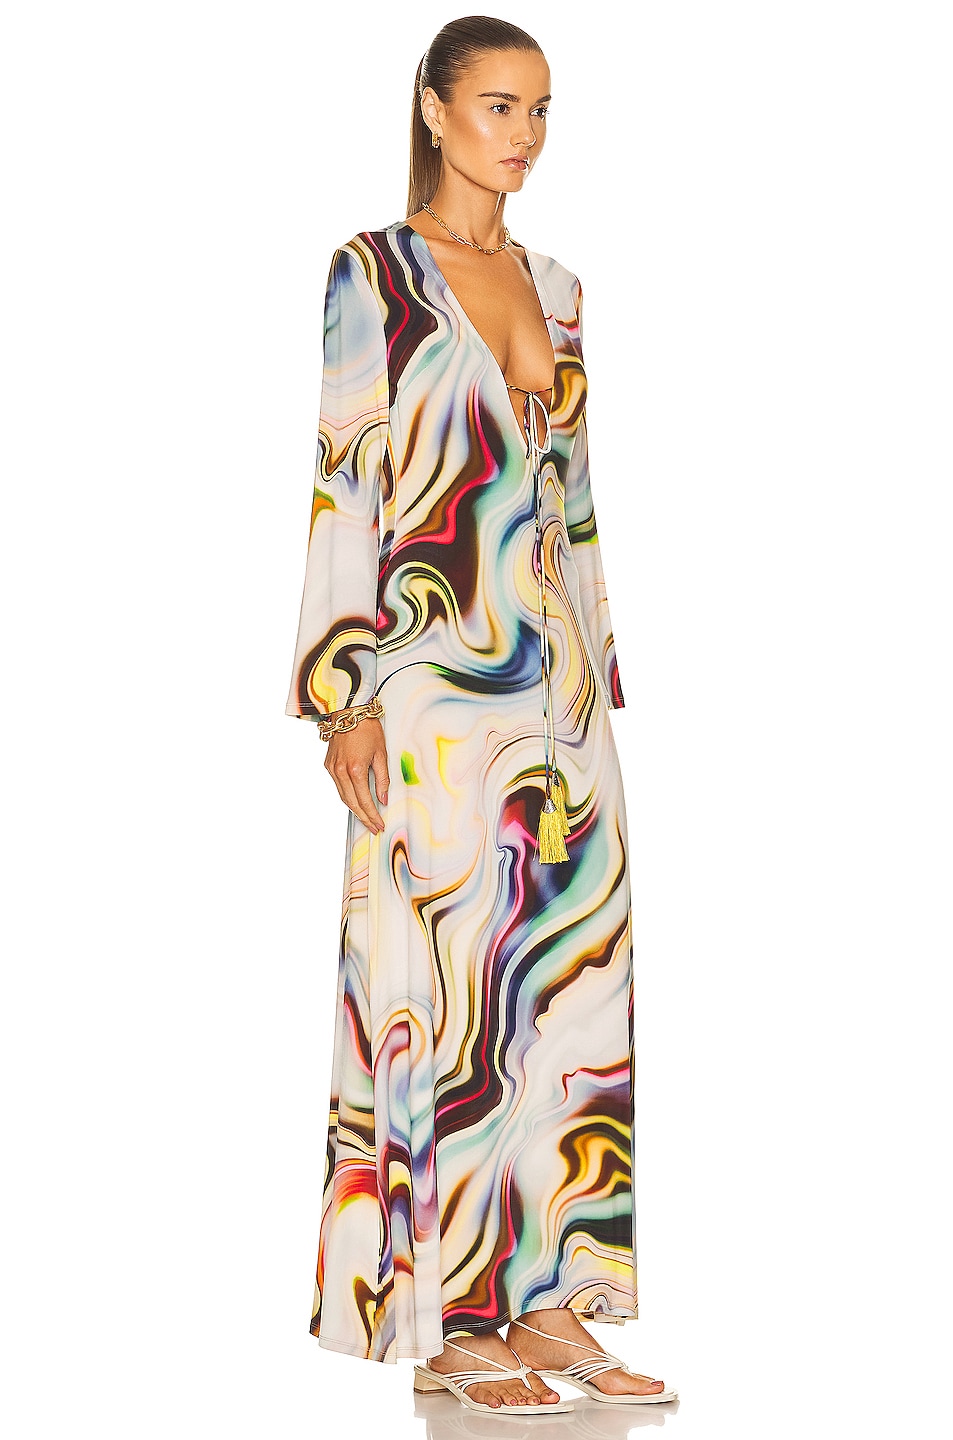 Alexis Beriana Dress in Multicolor Mist | FWRD